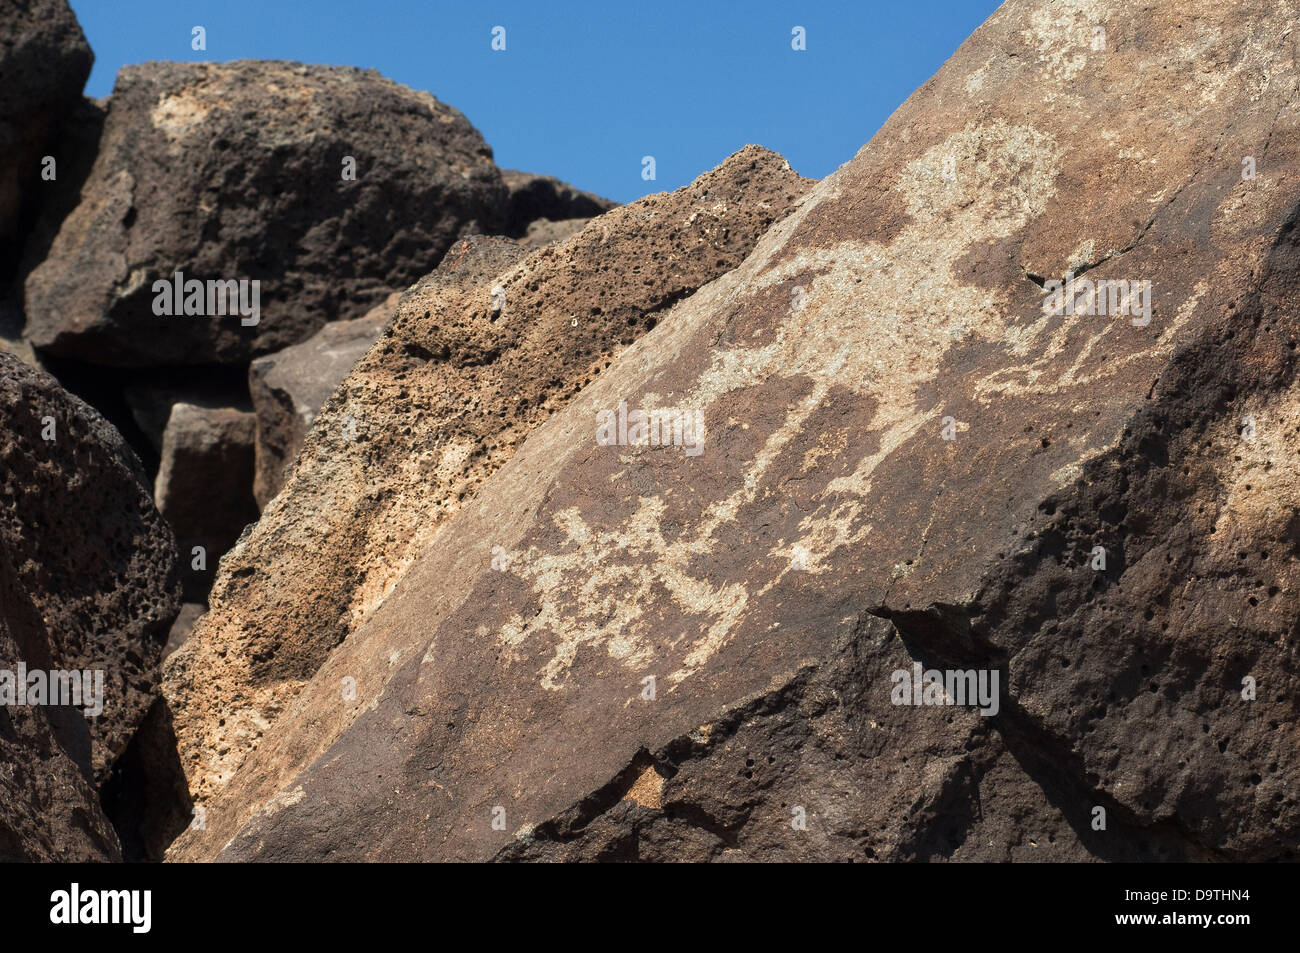 Native American petroglyphs on basalt, Petroglyph State Park, New Mexico. Digital photograph Stock Photo